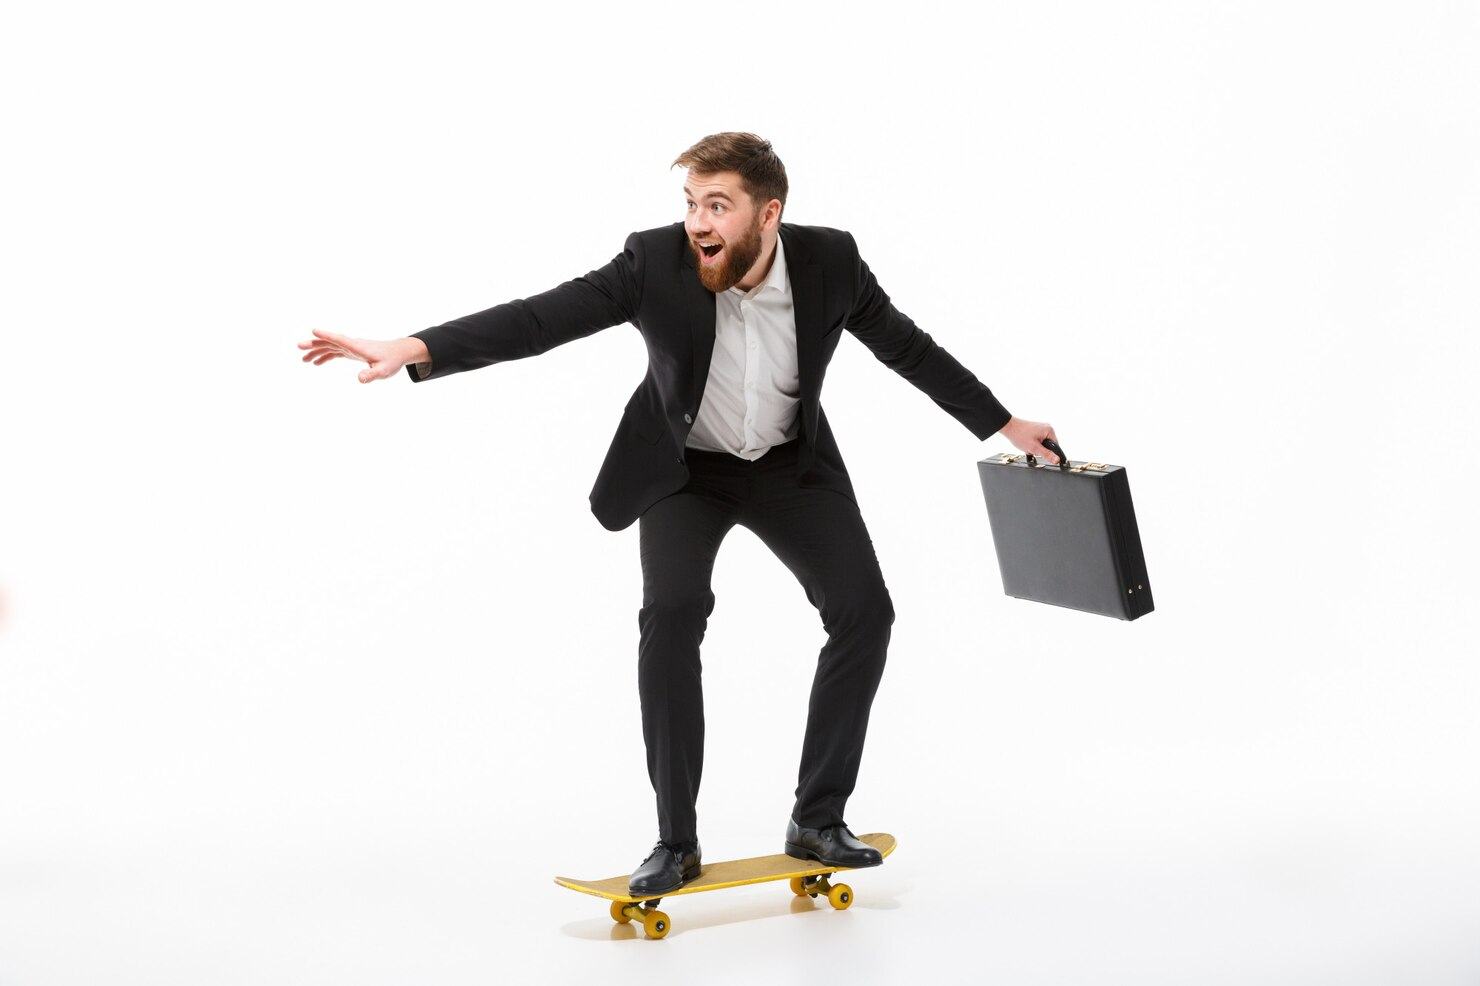 A businessman with a briefcase on a skateboard.